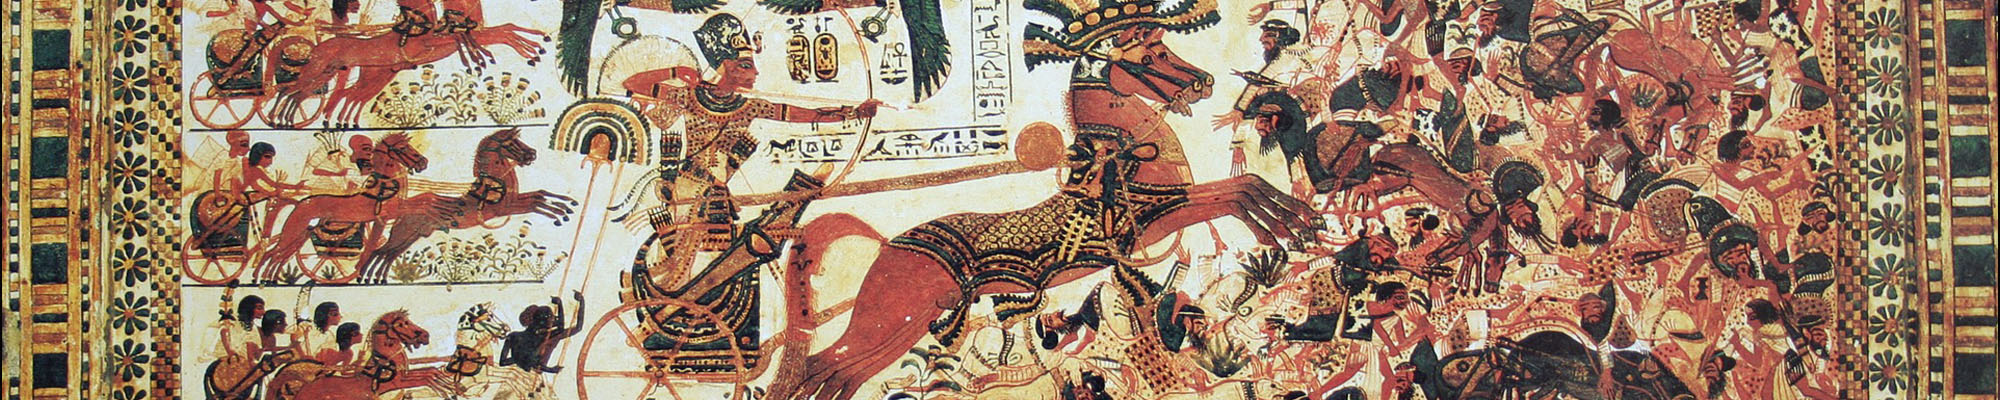 King Tutankhamun in hieroglyphics